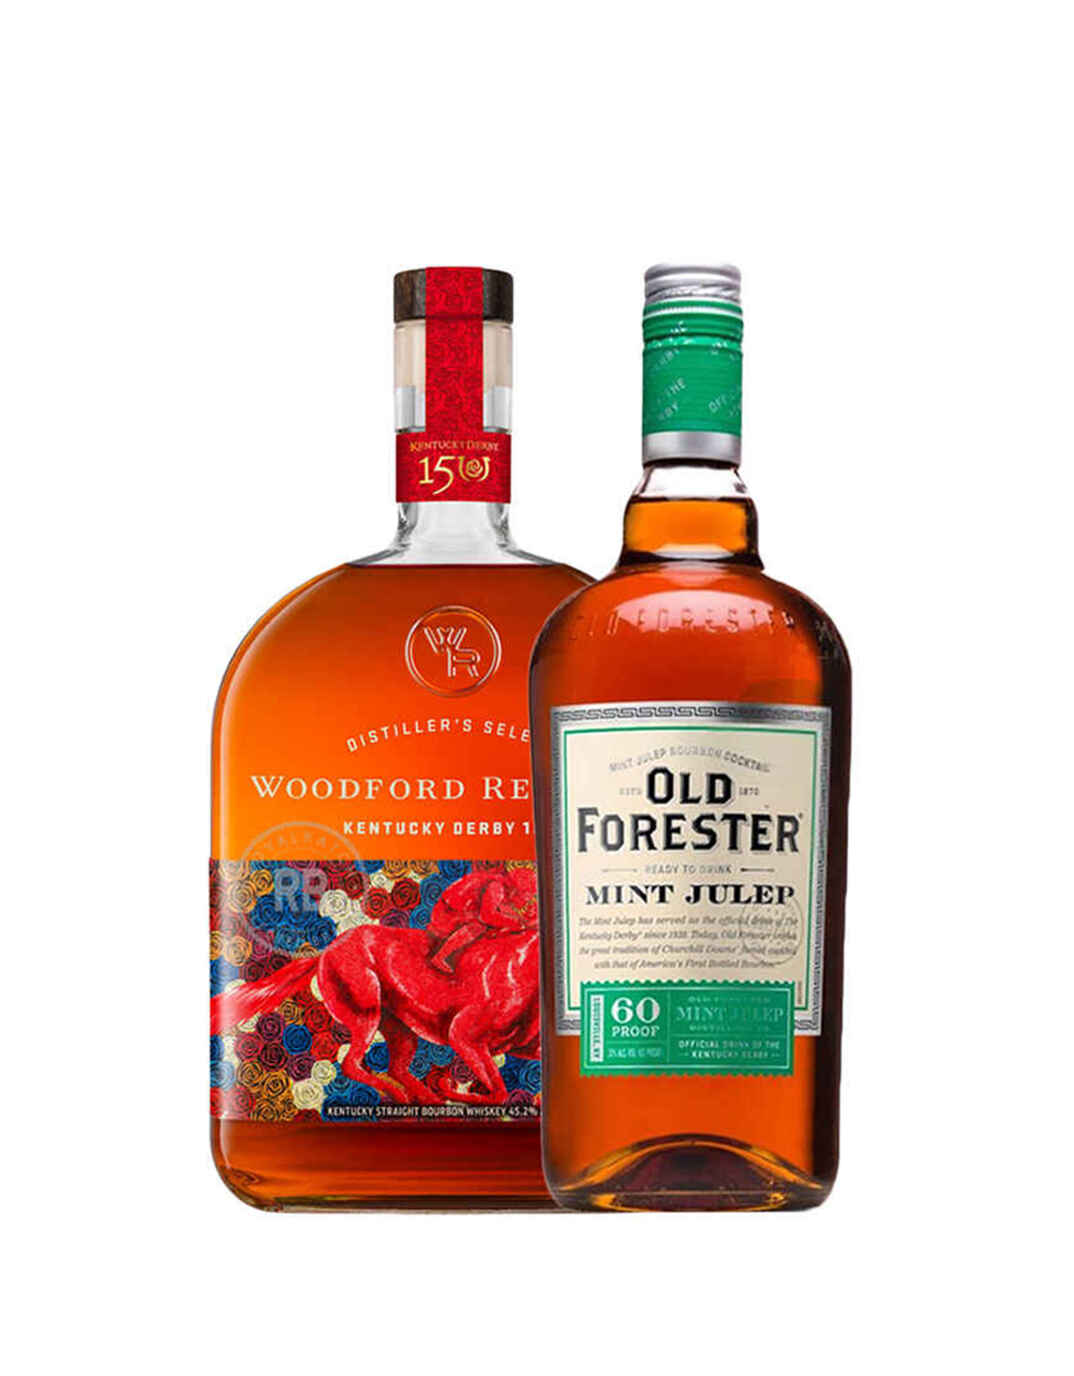 Old Forester Mint Julep + Woodford Reserve Derby 150 Bourbon Whiskey (2 Pack) Bundle #013